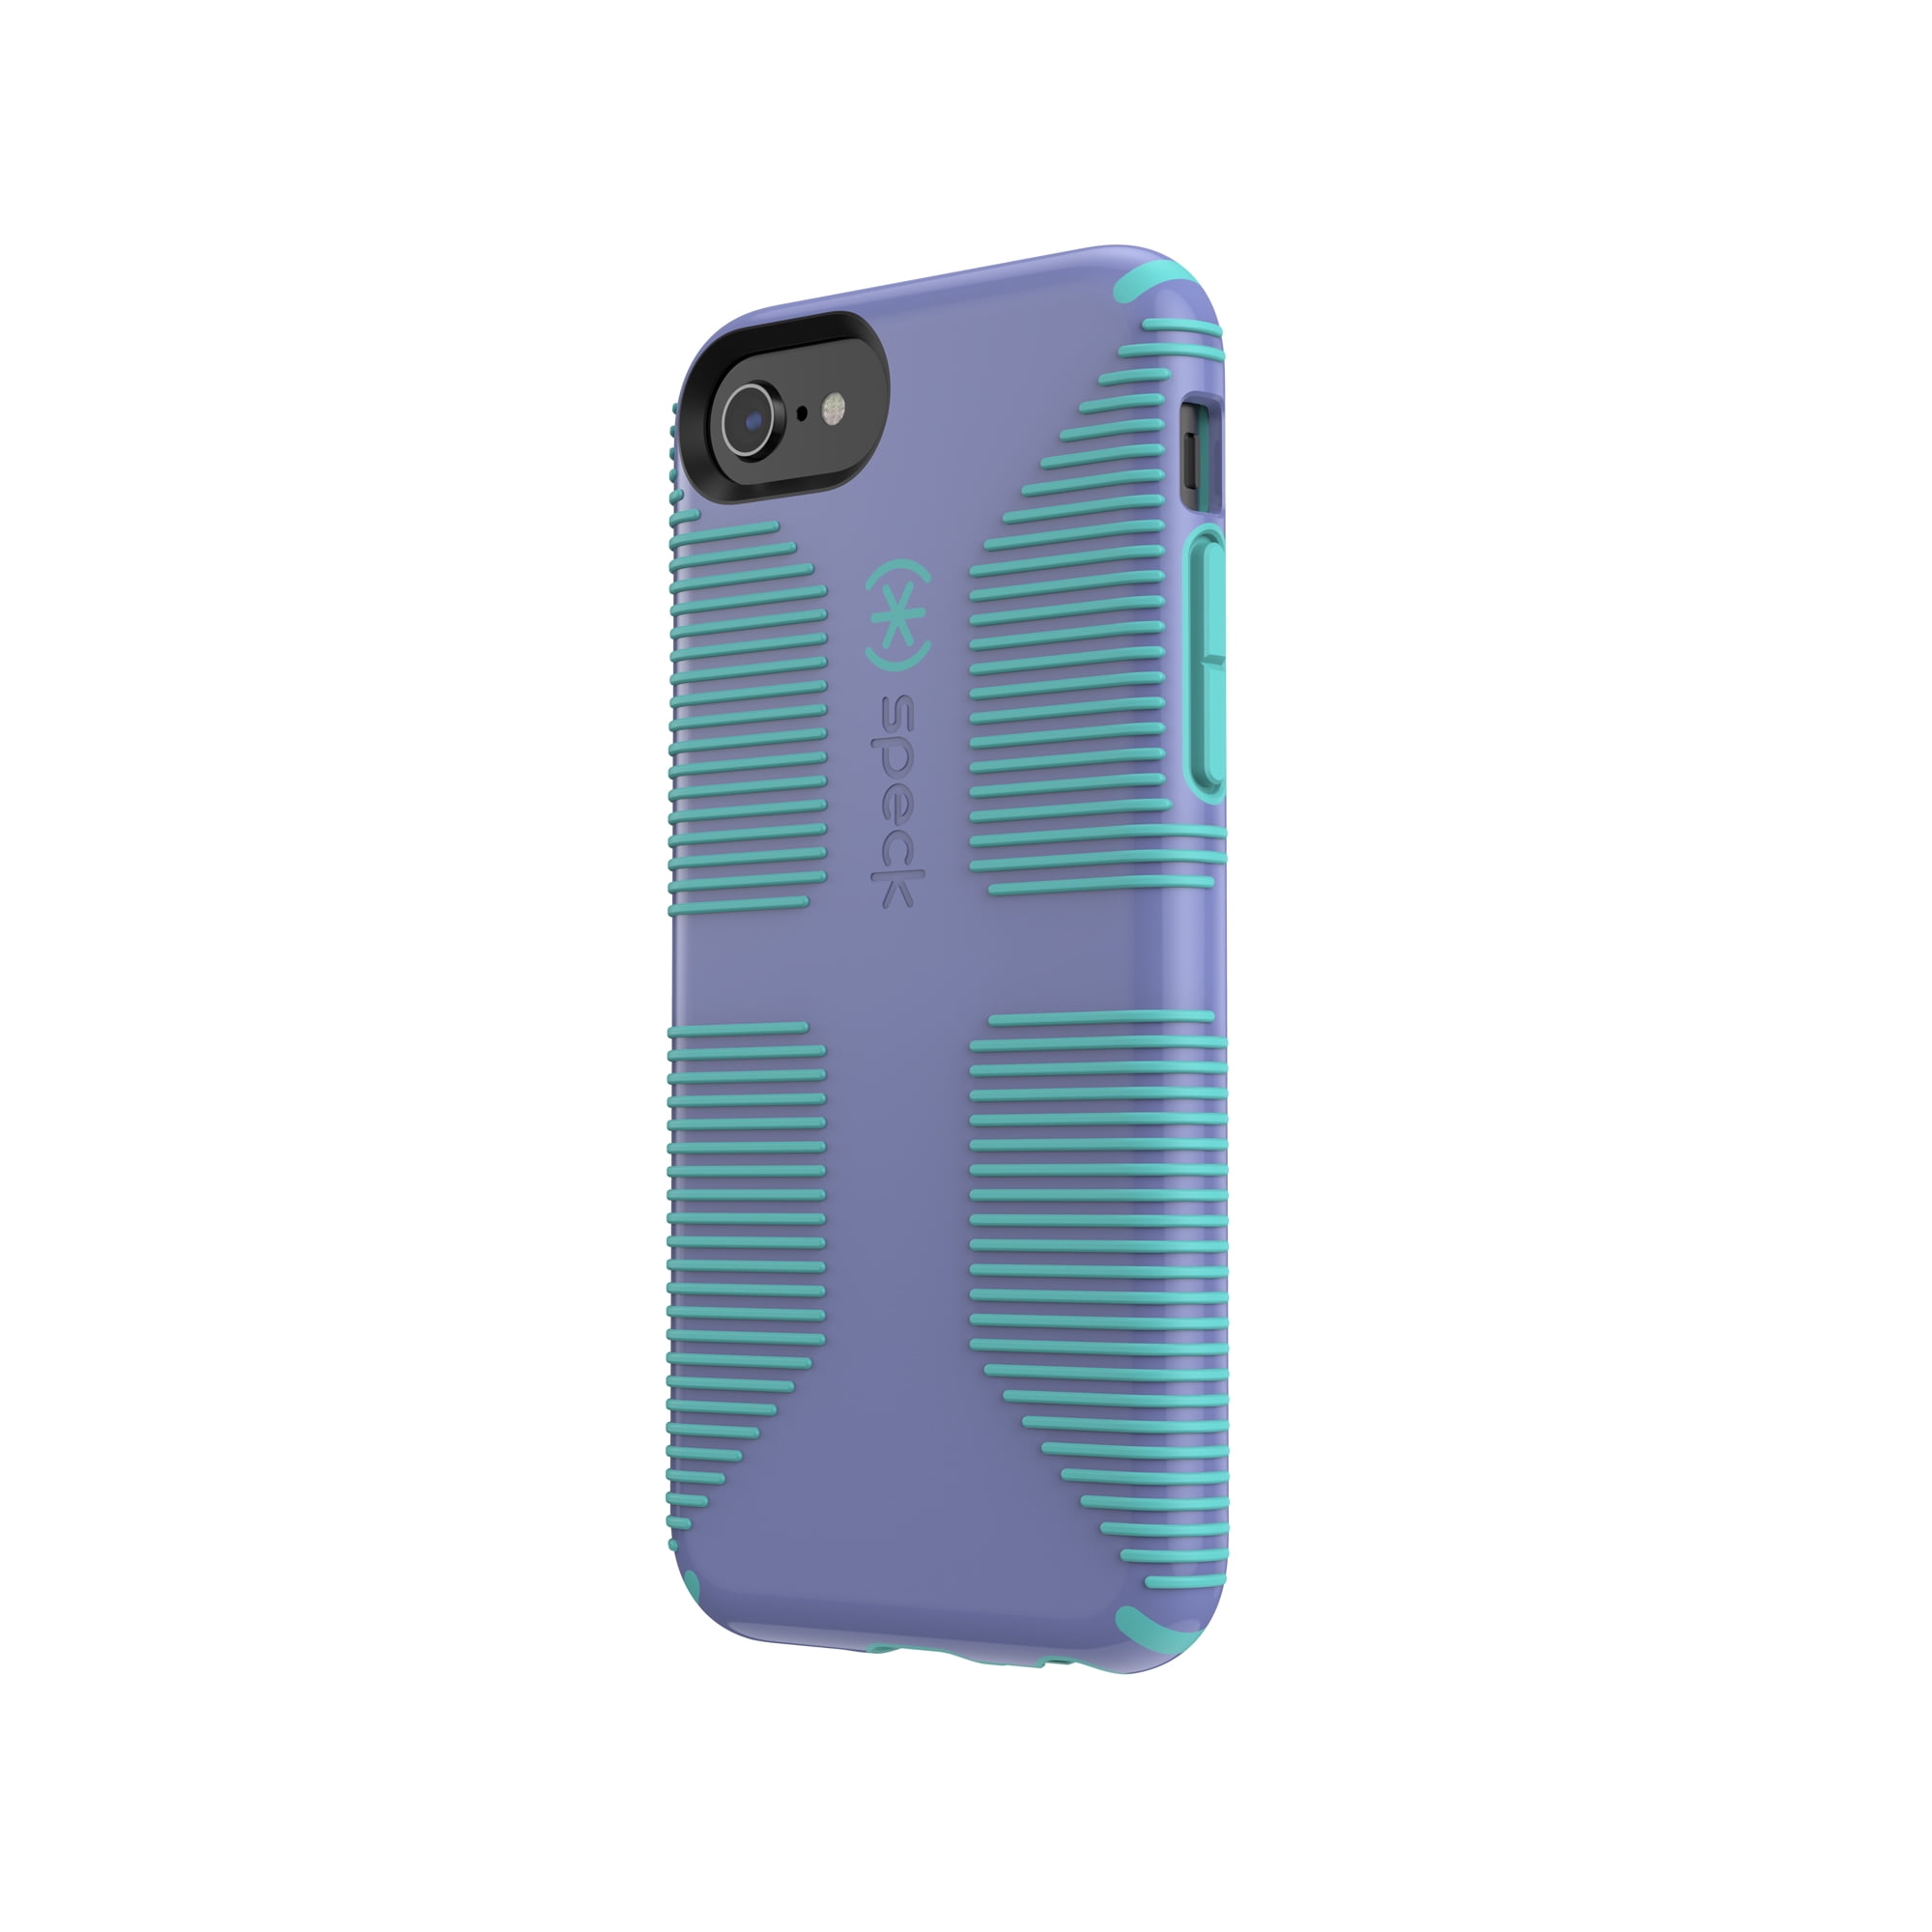 Speck iPhone XR Candyshell Grip Case, Purple & Blue 